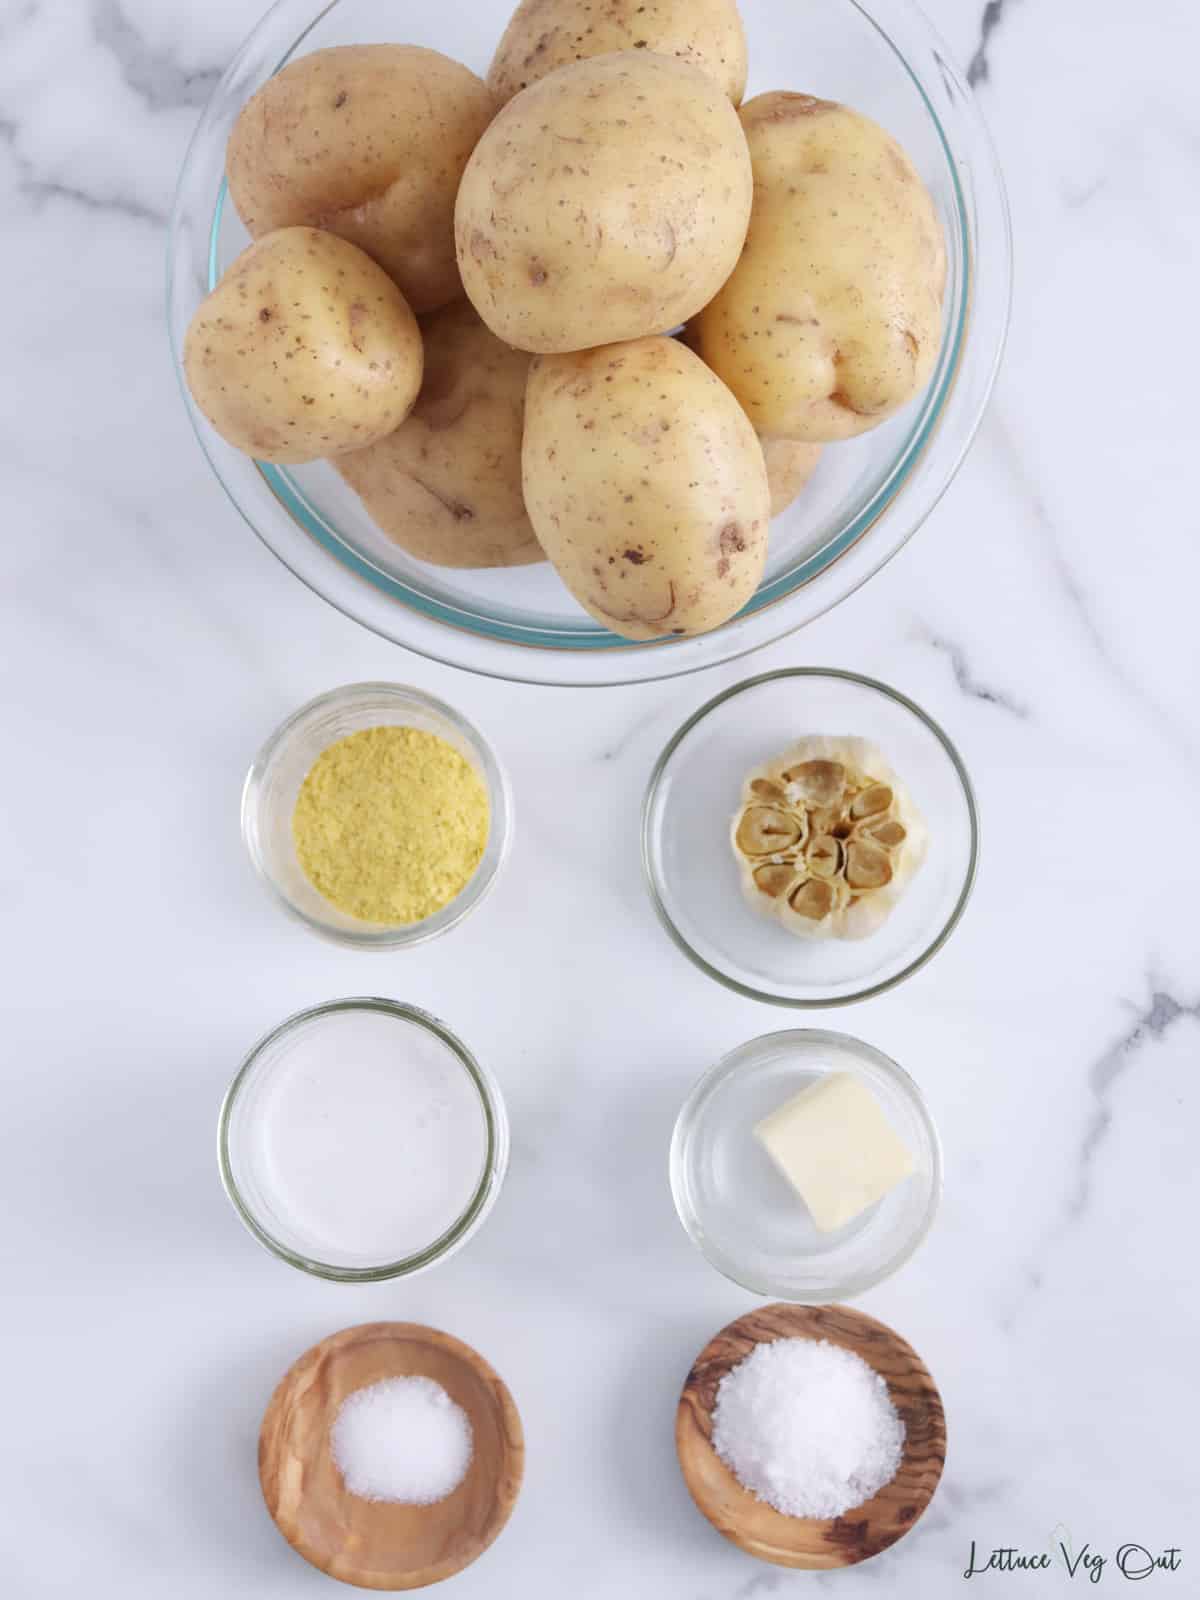 Bowls of ingredients for dairy free garlic mashed potatoes.